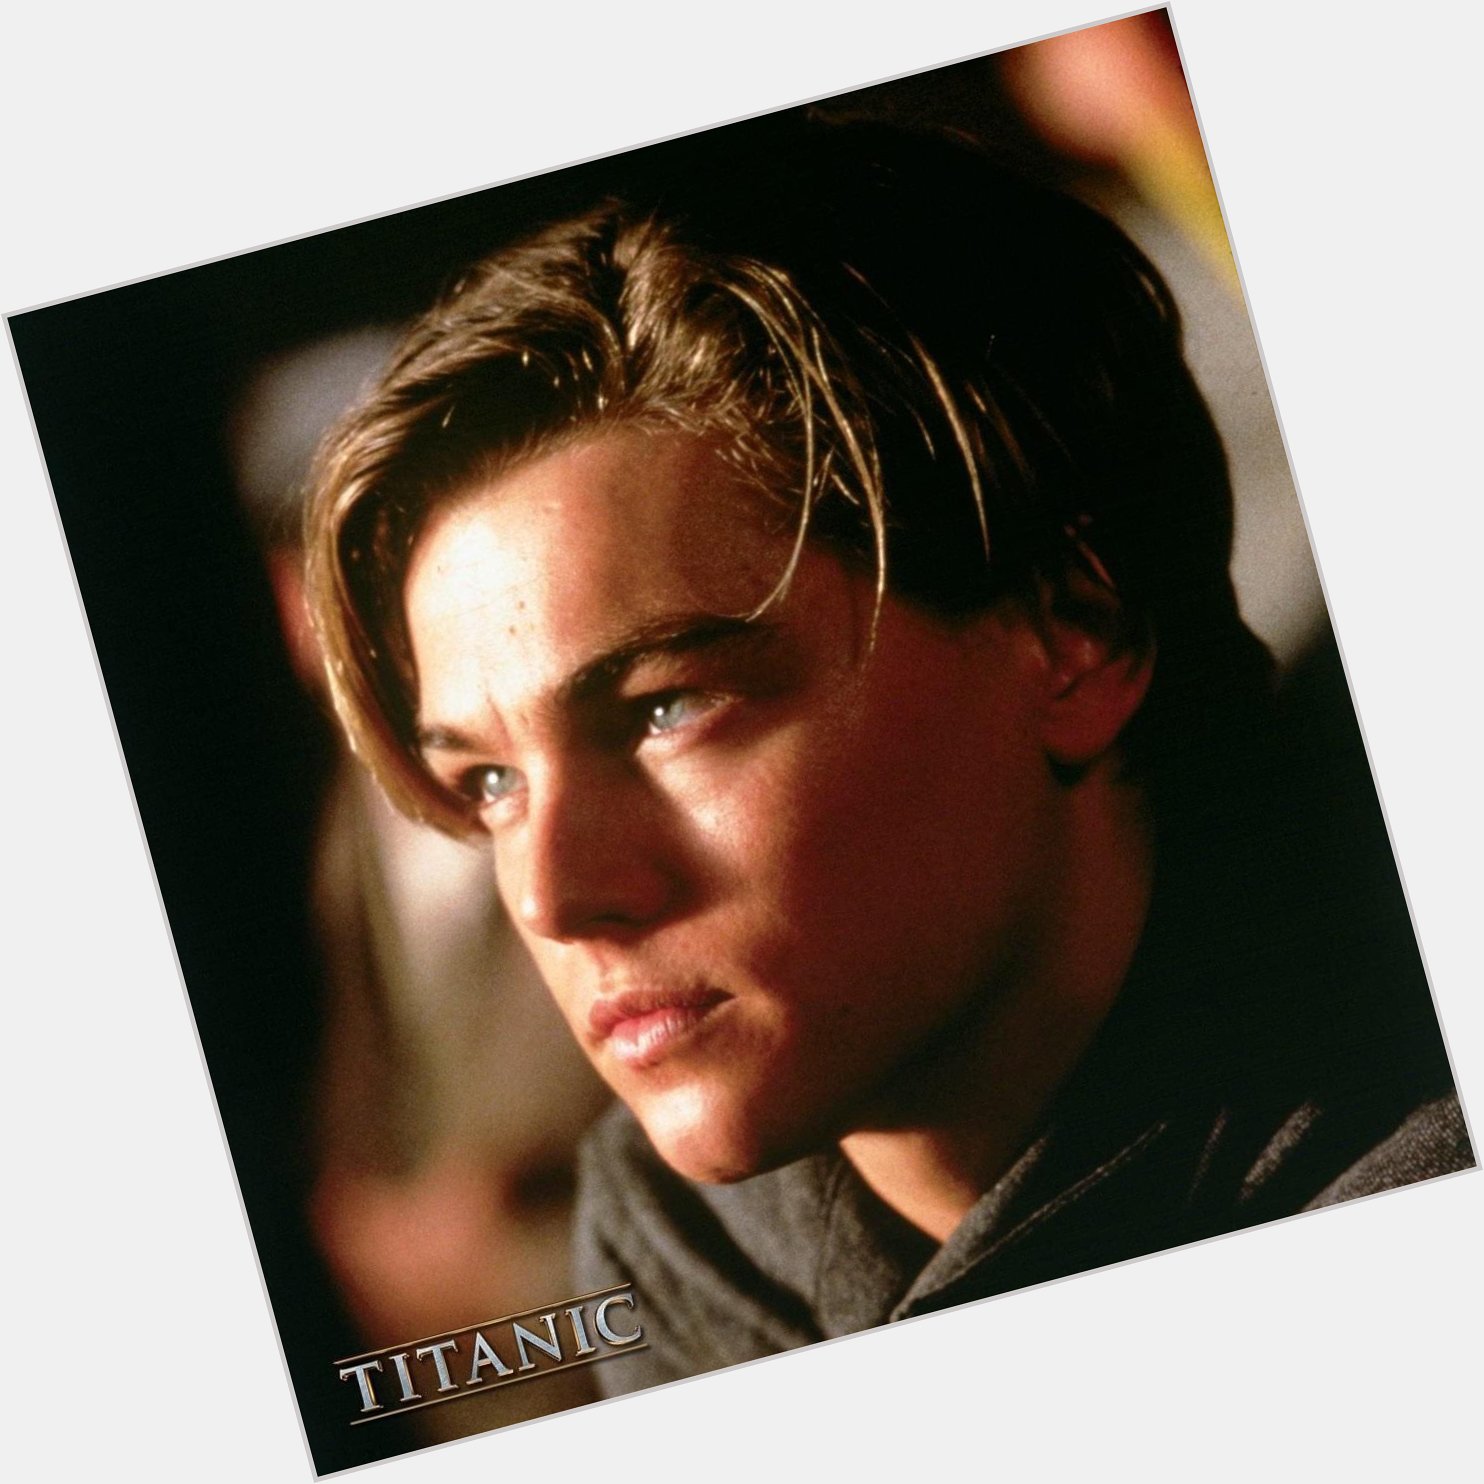 Wishing Leonardo DiCaprio a happy birthday today! 